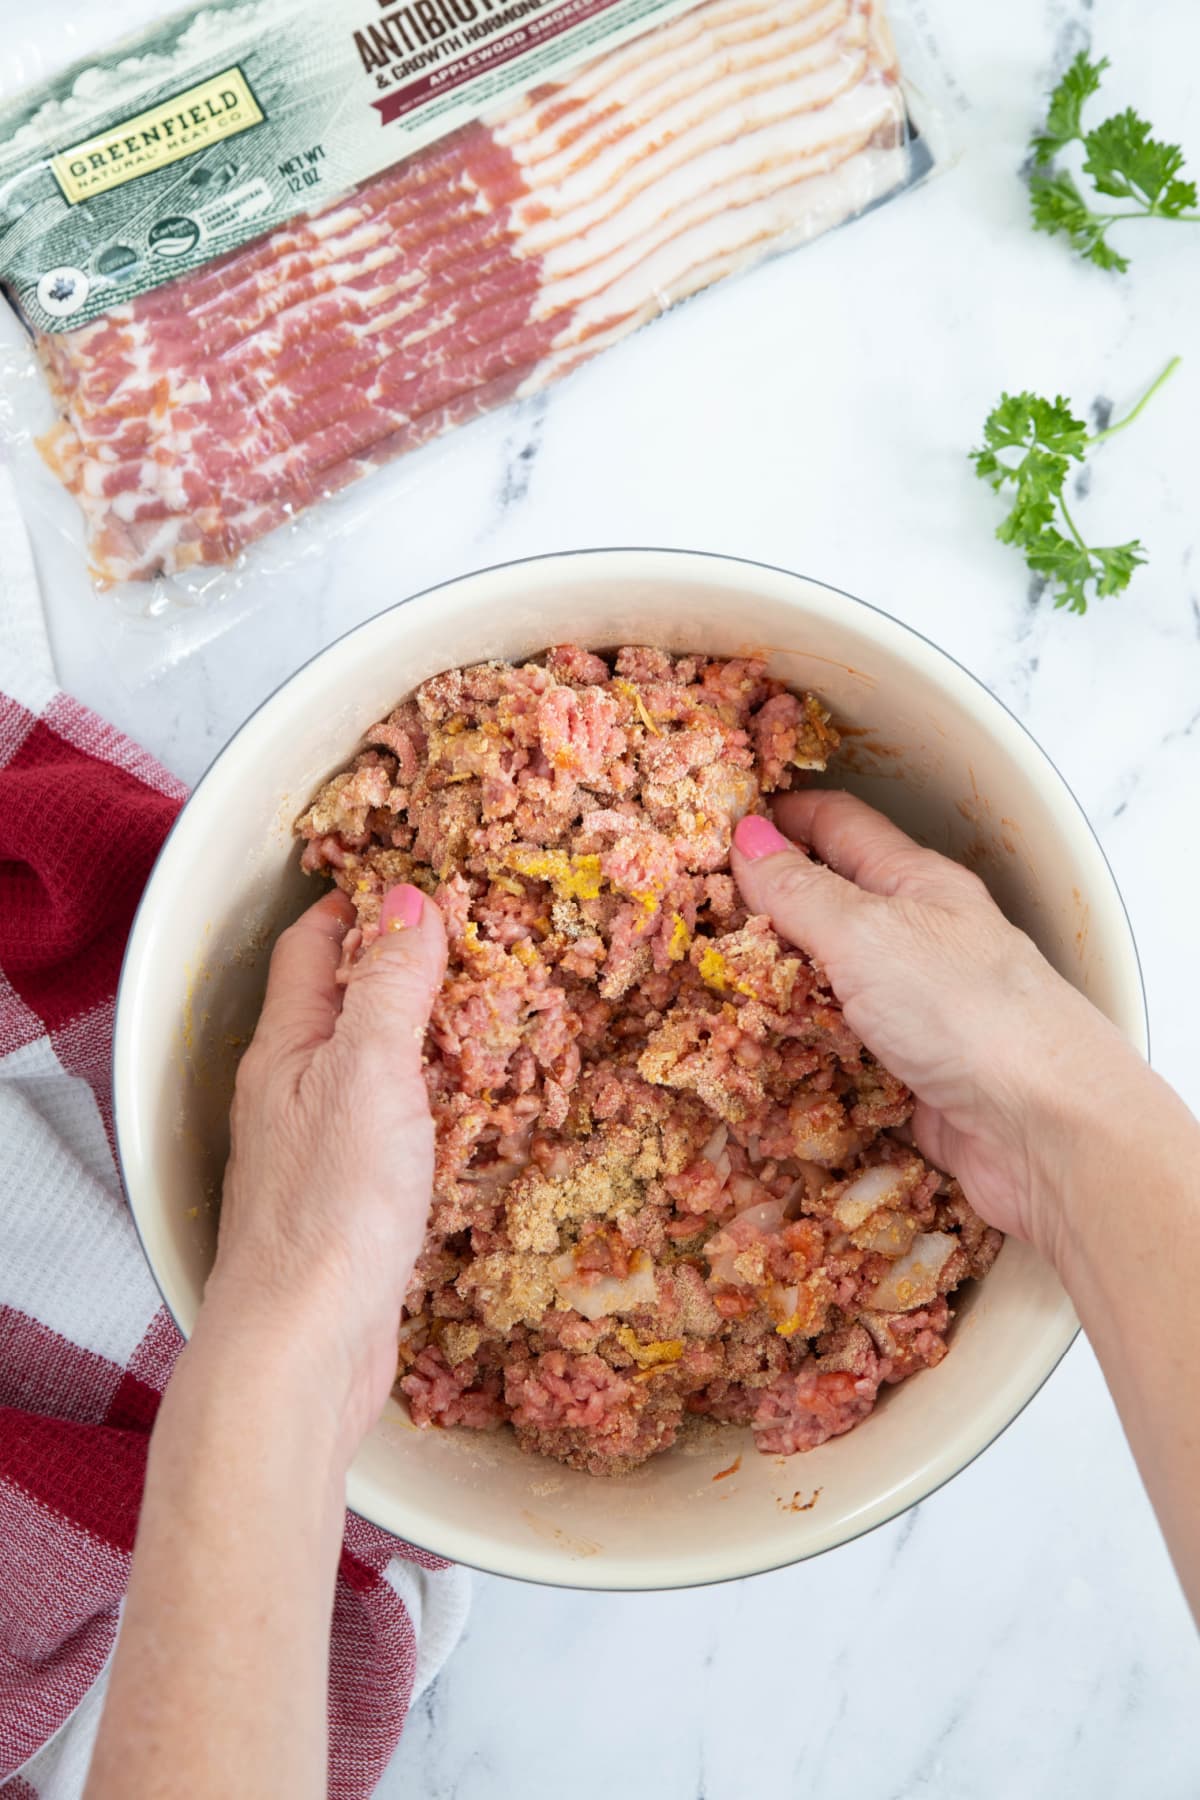 Using hands to blend meatloaf ingredients